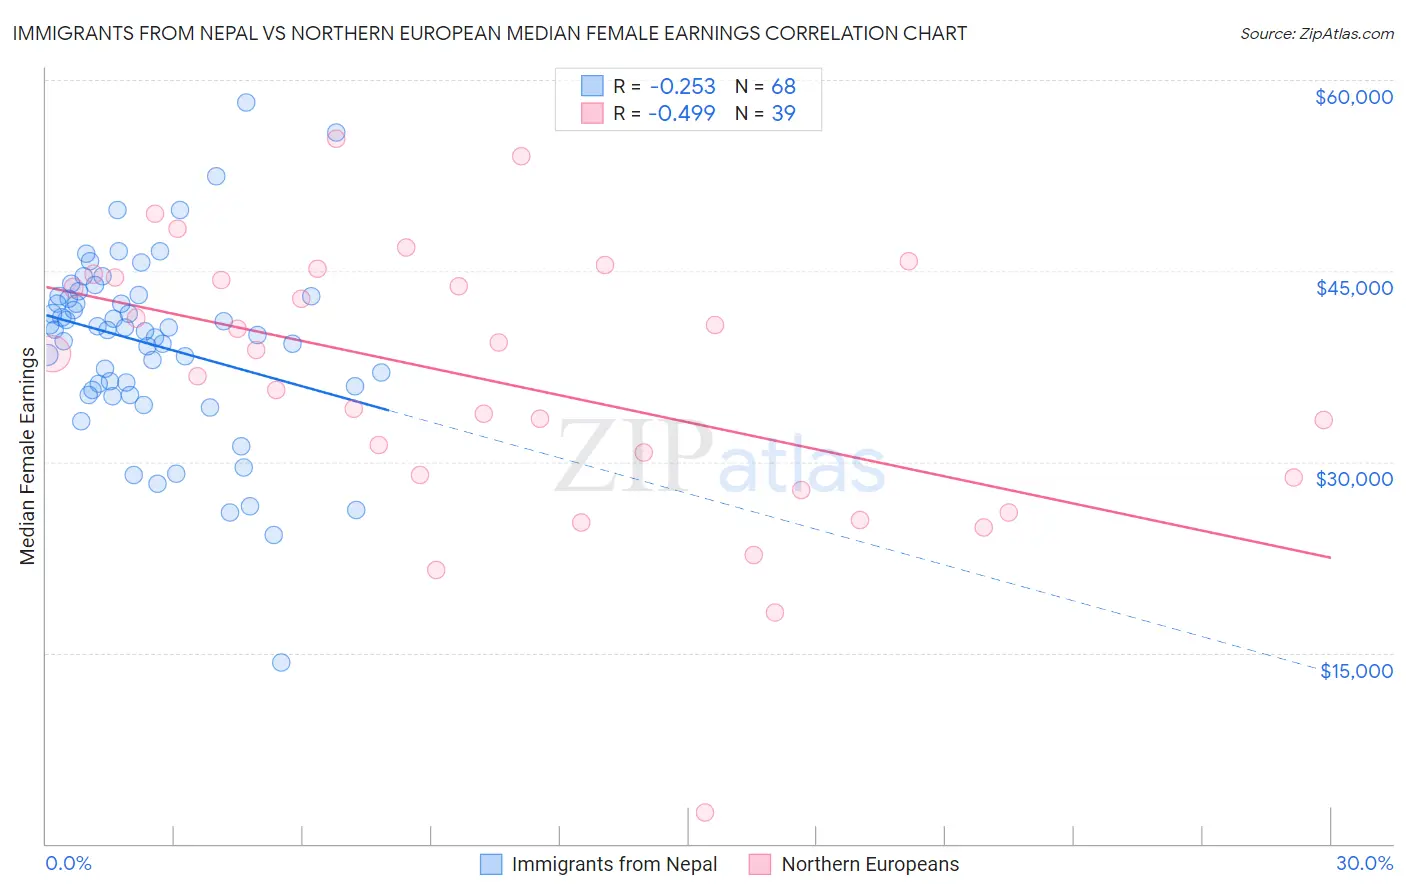 Immigrants from Nepal vs Northern European Median Female Earnings